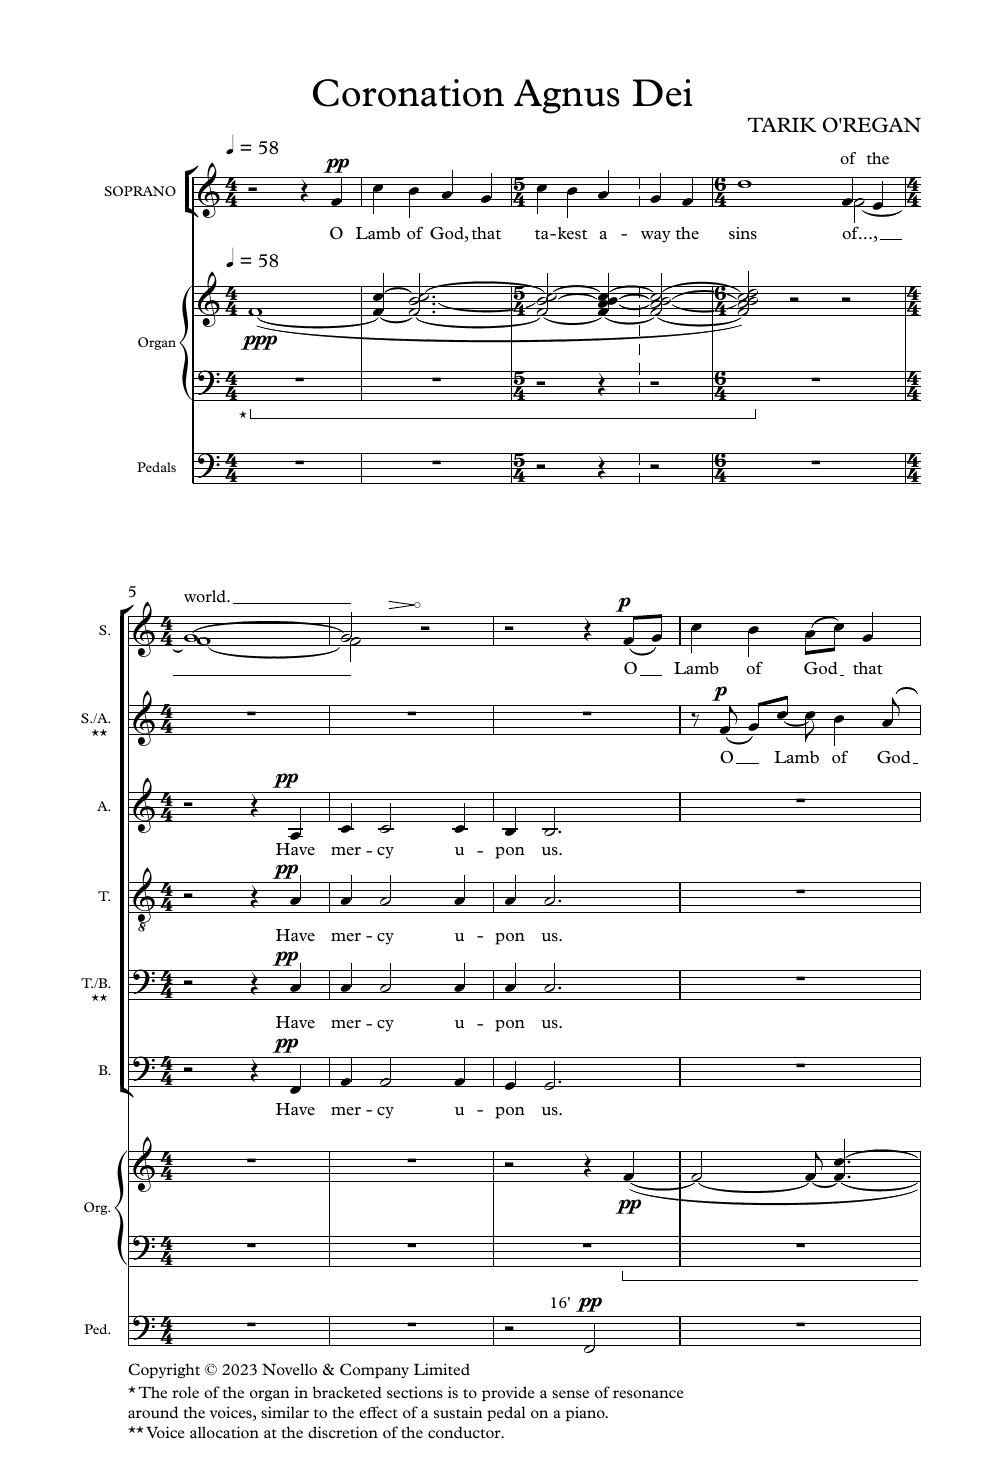 Tarik O'Regan Coronation Agnus Dei Sheet Music Notes & Chords for SATB Choir - Download or Print PDF